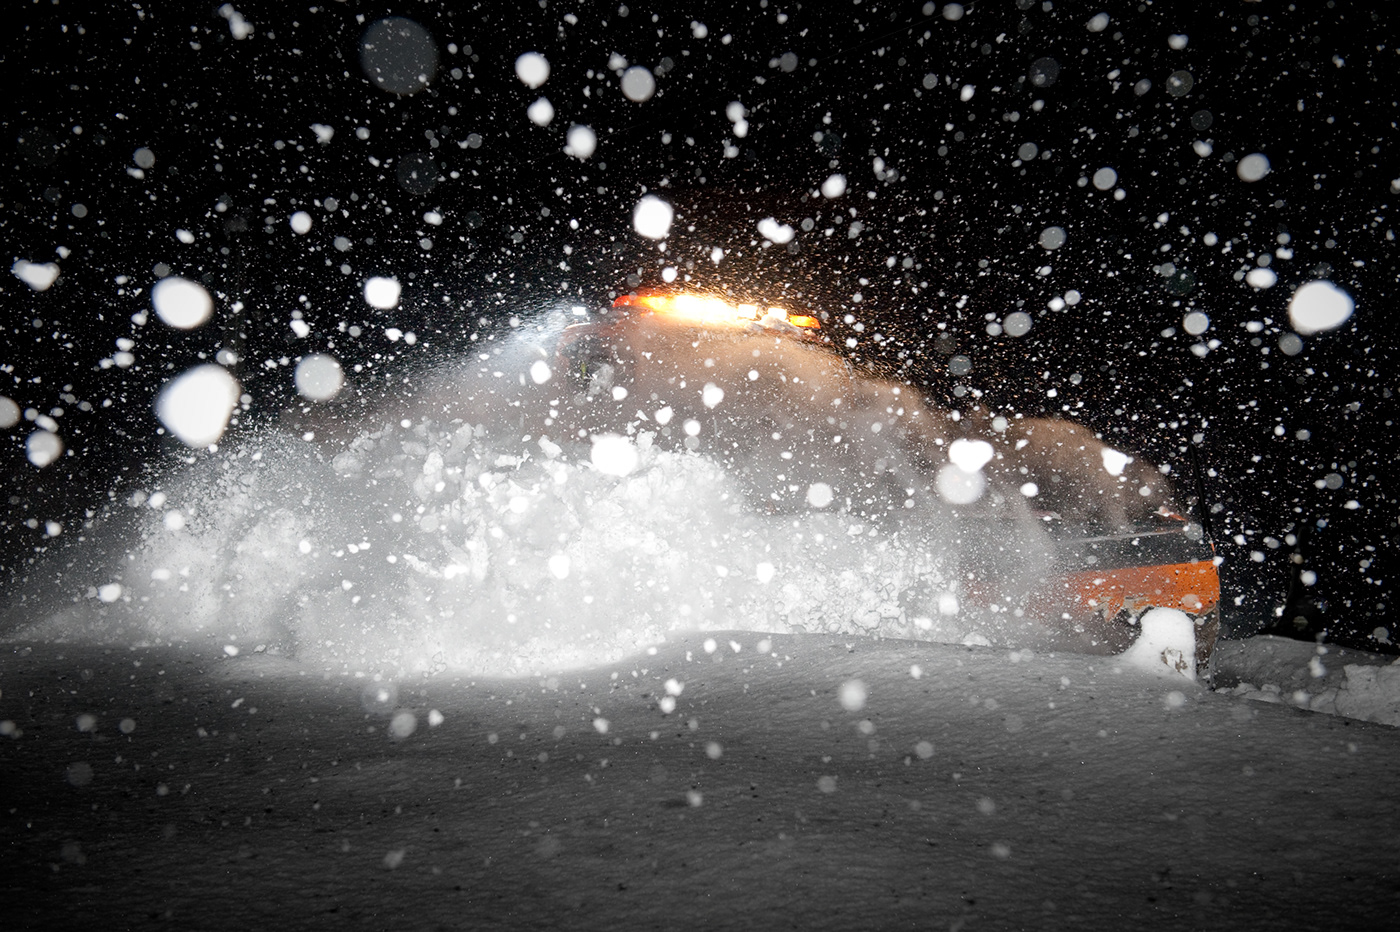 alpinelife plow powder snowfall snowplow U400 unimog winter